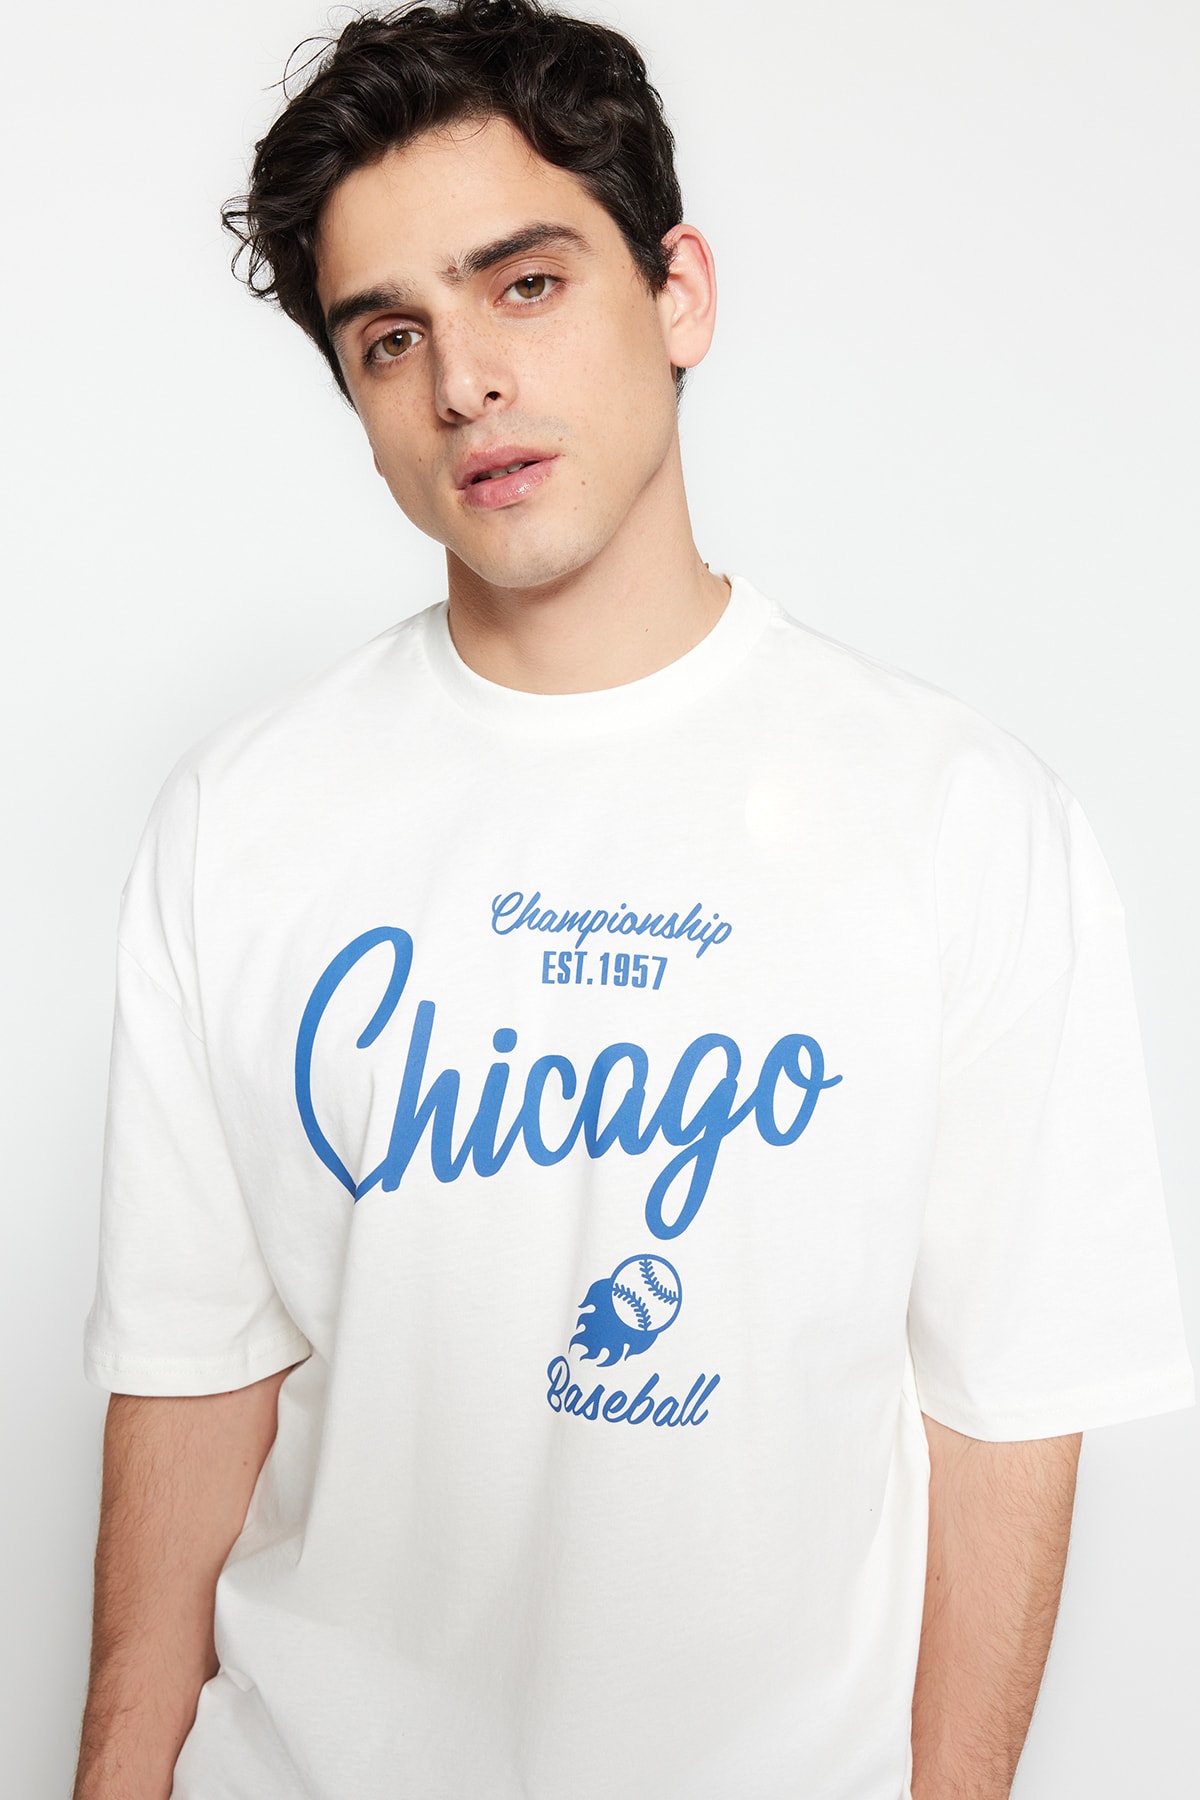 Trendyol Ecru Regular/Regular Fit City Printed Short Sleeve 100% Cotton T-Shirt